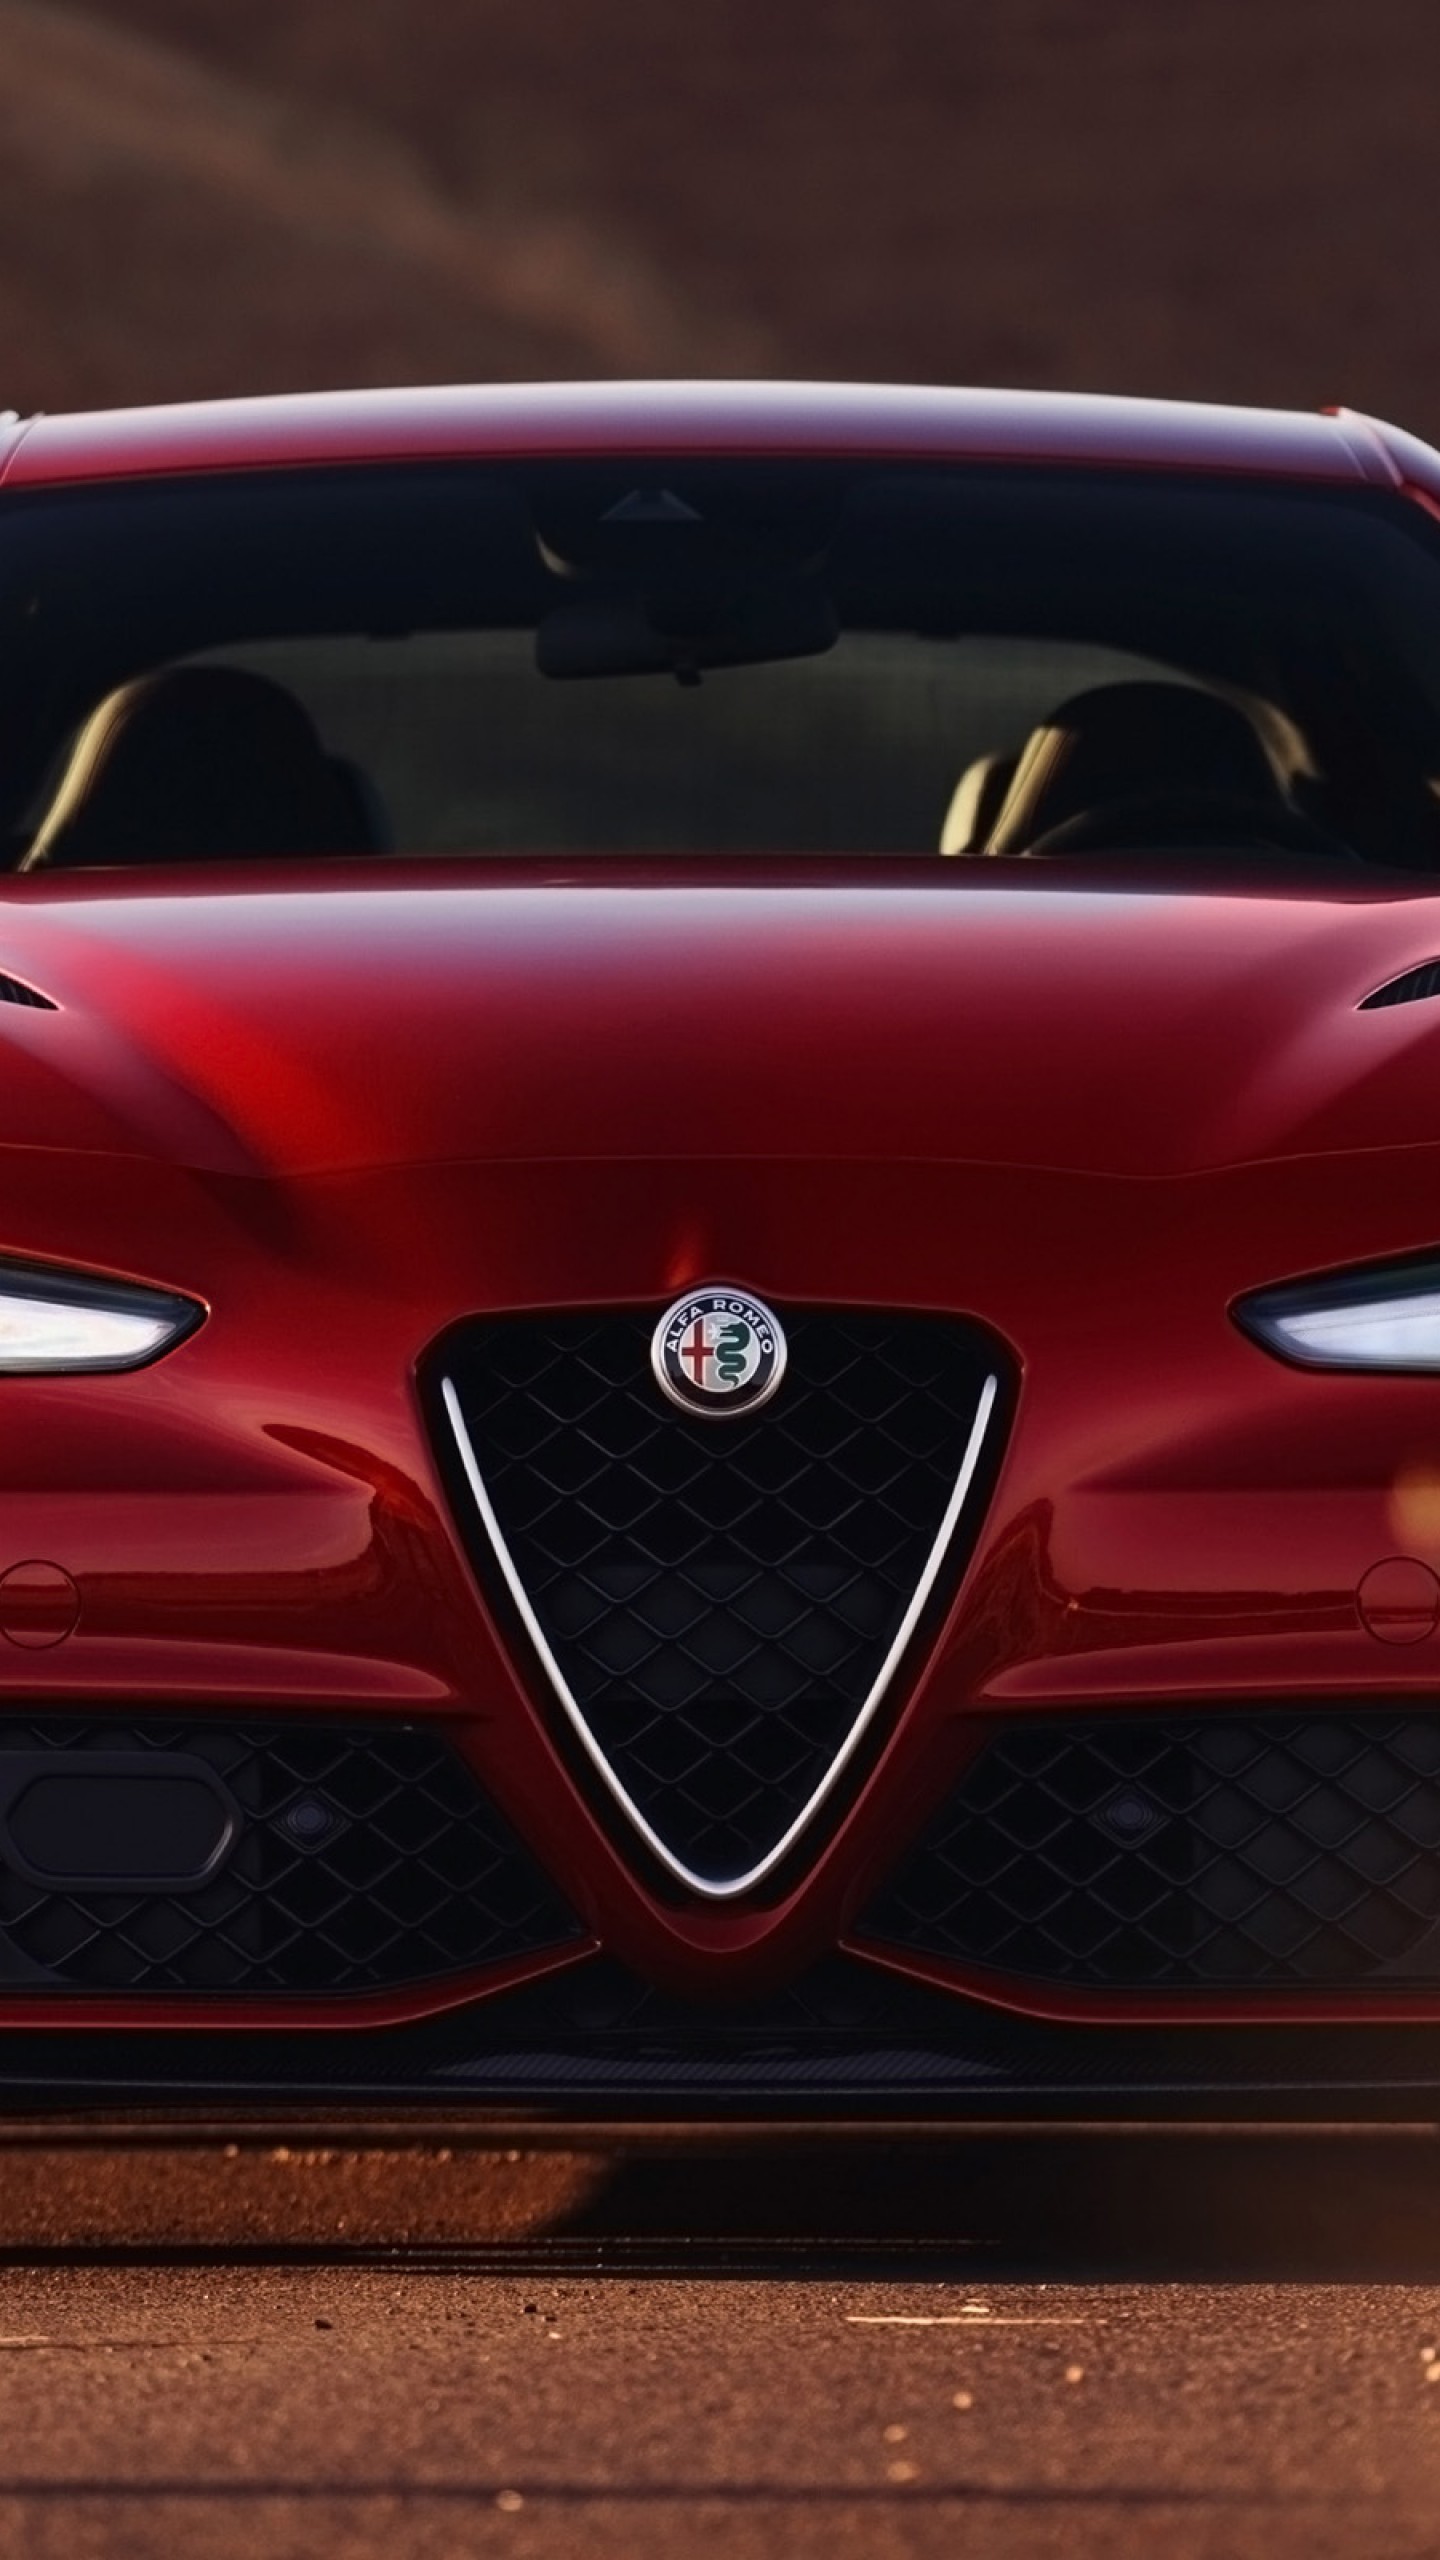 19+ Alfa Romeo Giulia Wallpaper 3000 X 2000 free download